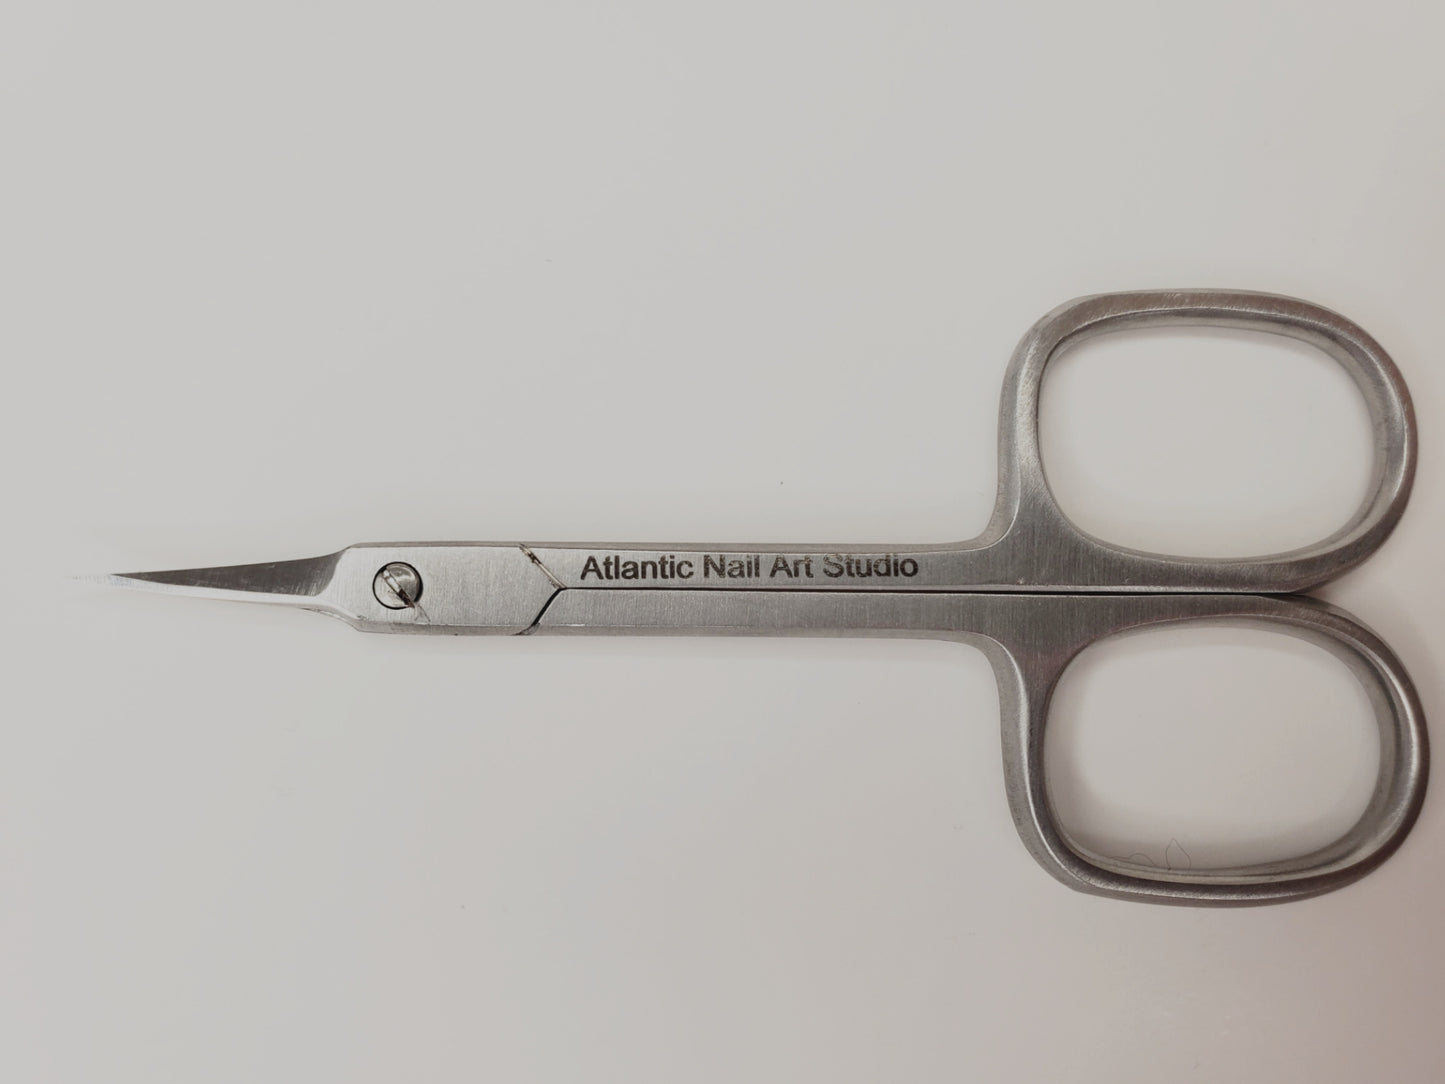 Atlantic Nail Art Studio - Cuticle scissors 95.22.